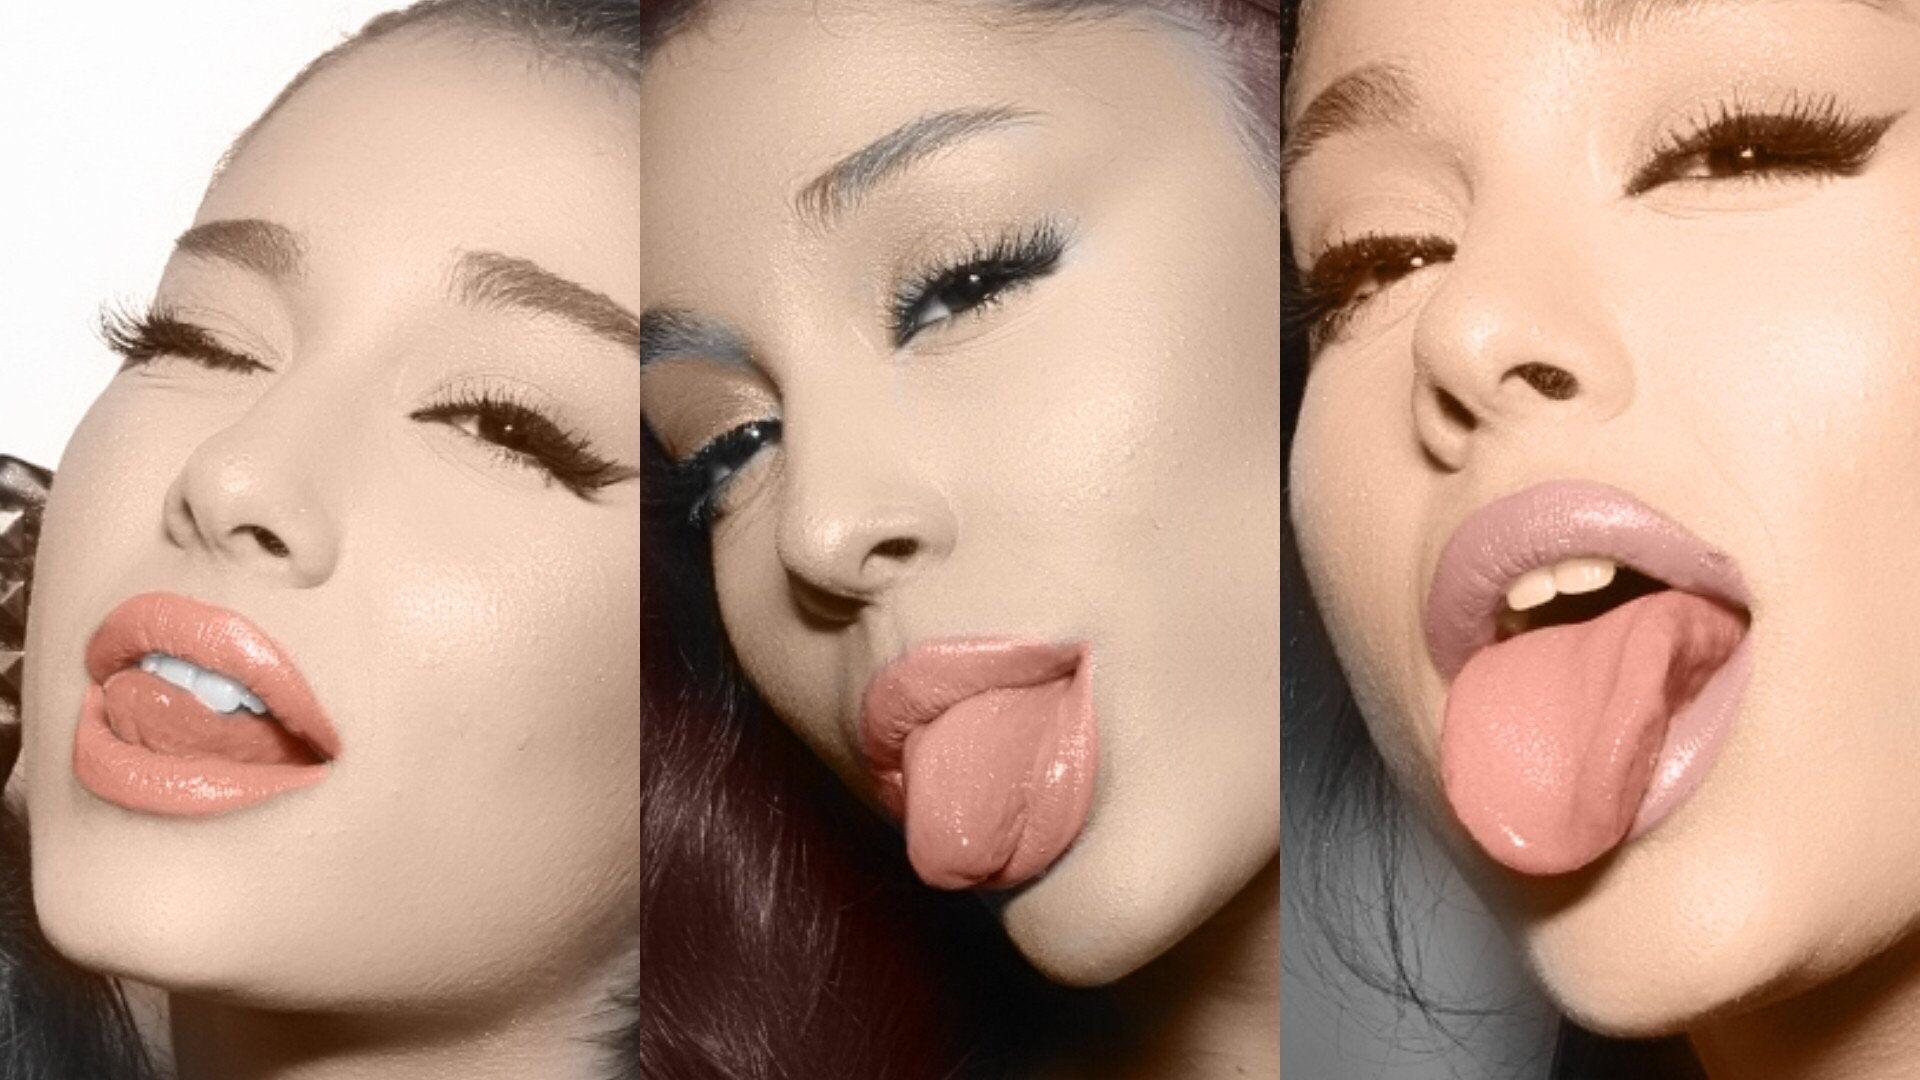 Ariana grande tongue out